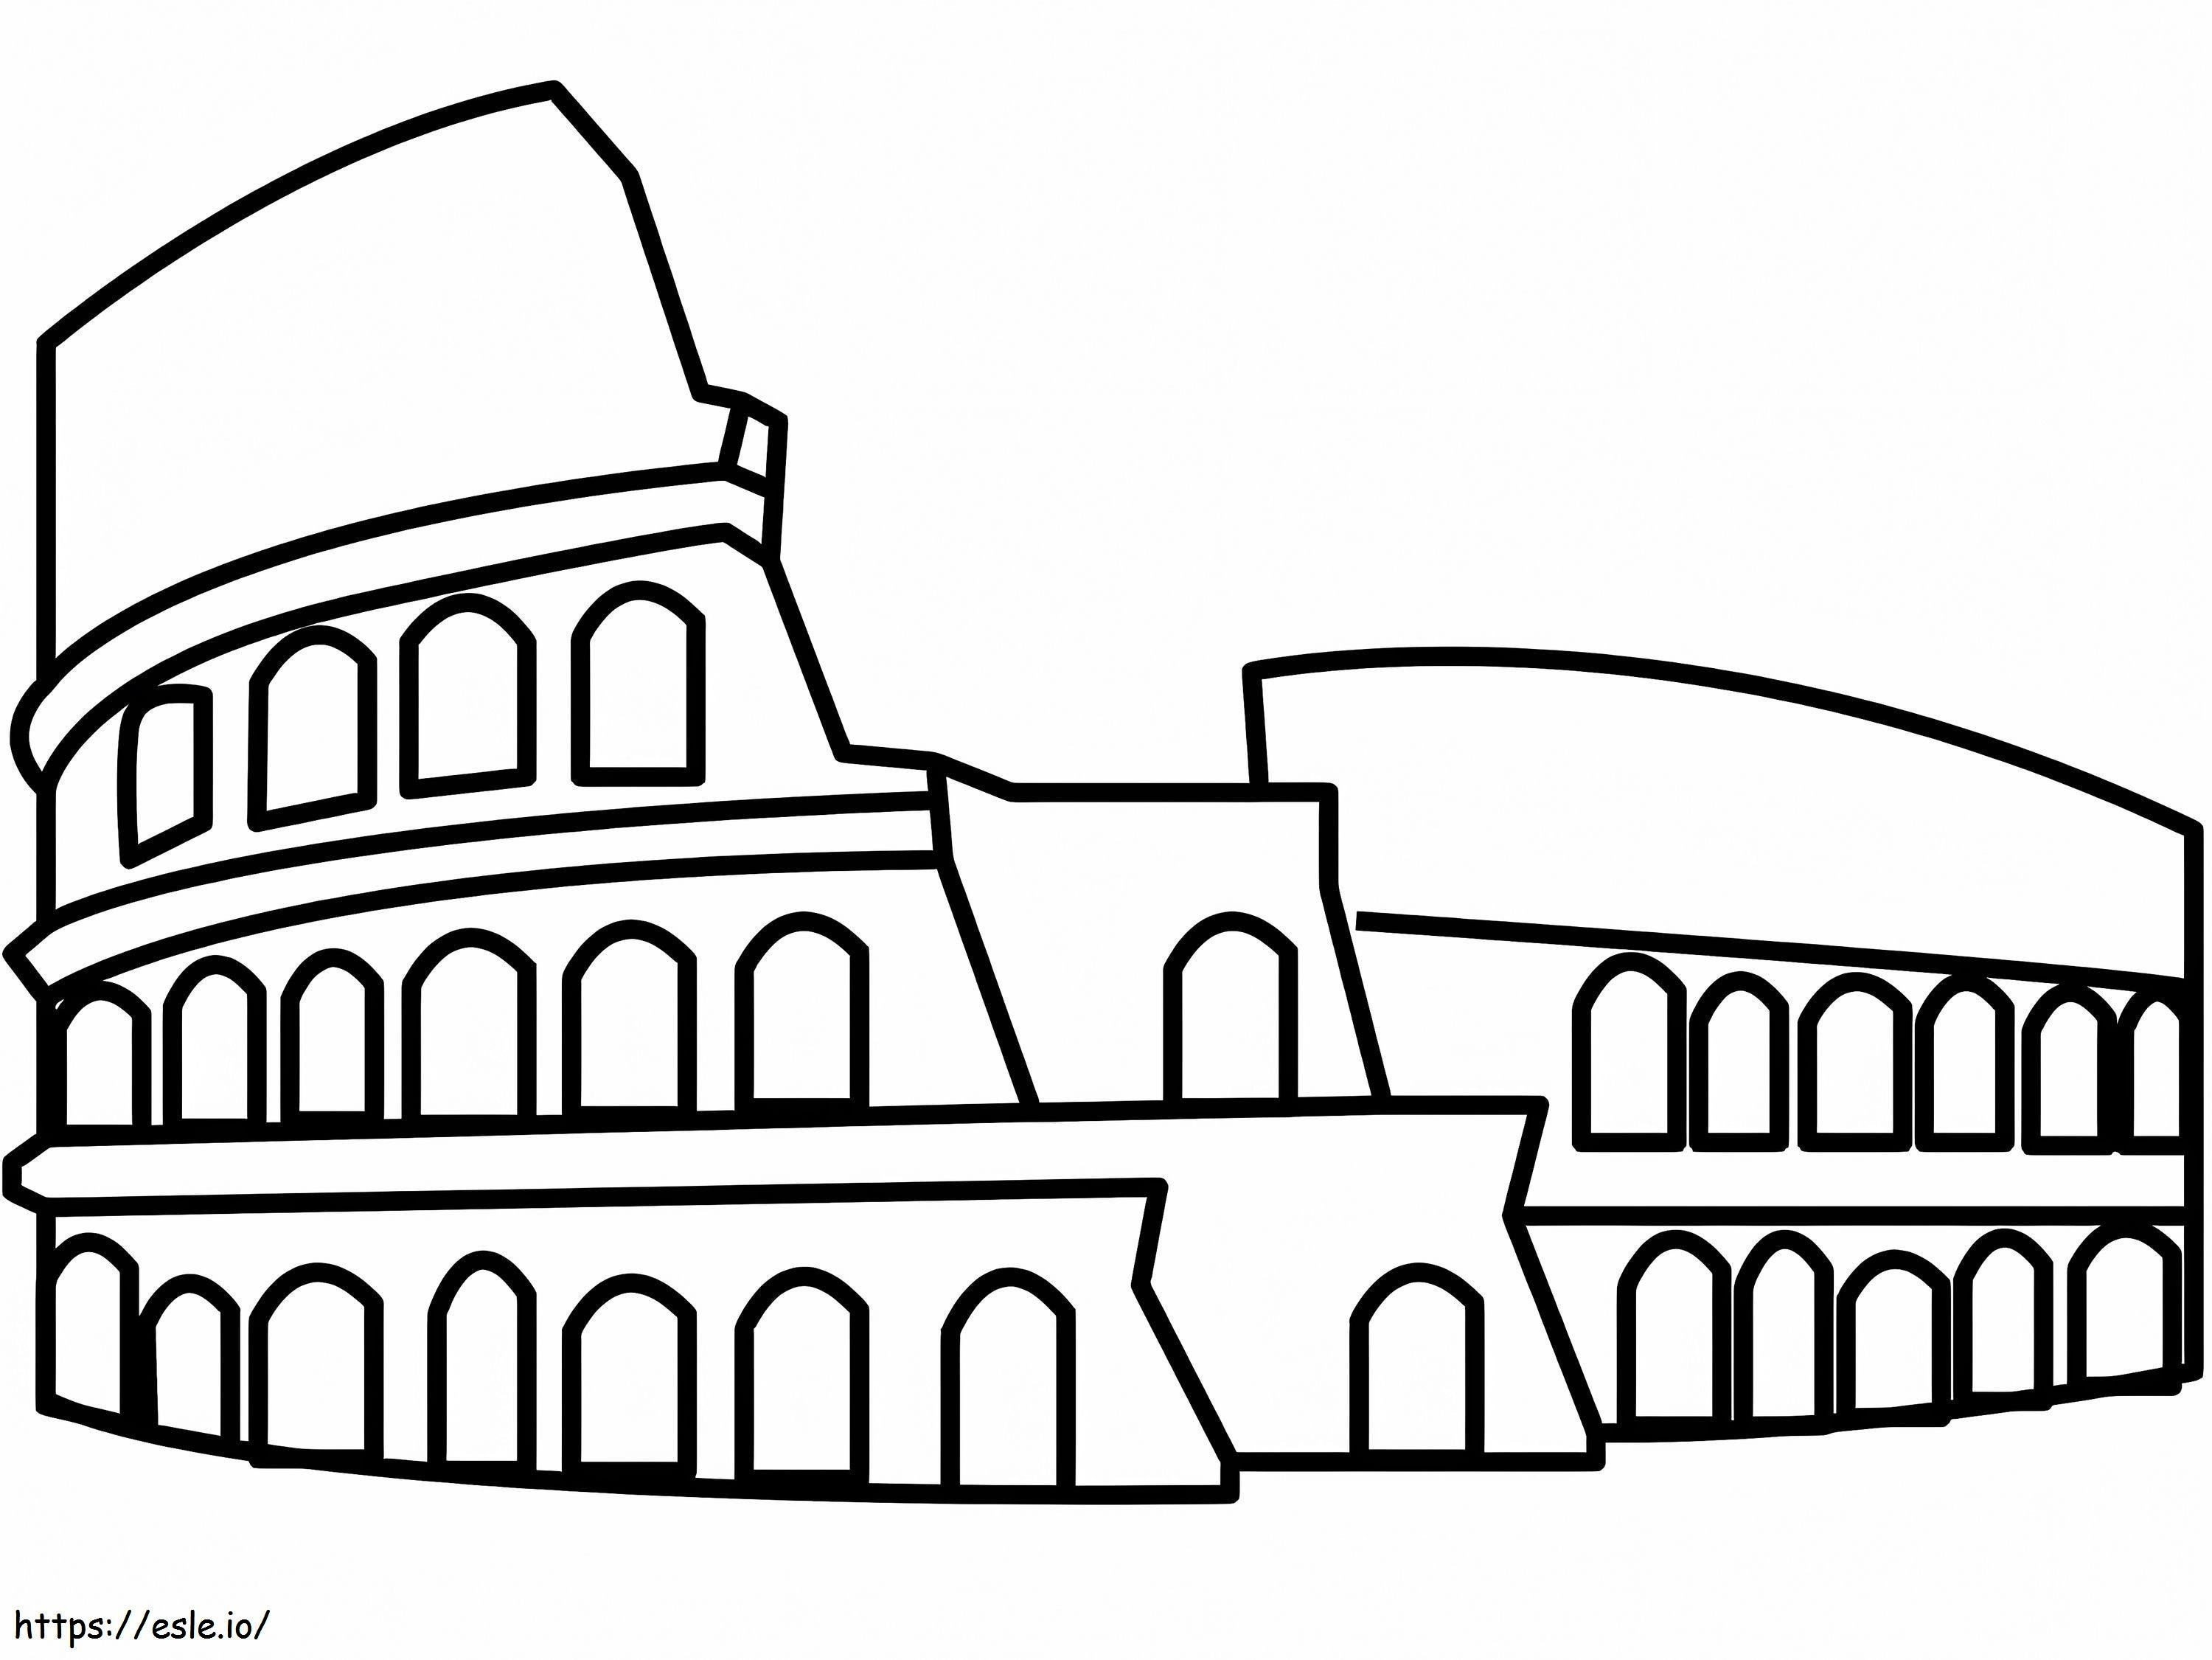 Colosseum kleurplaat kleurplaat